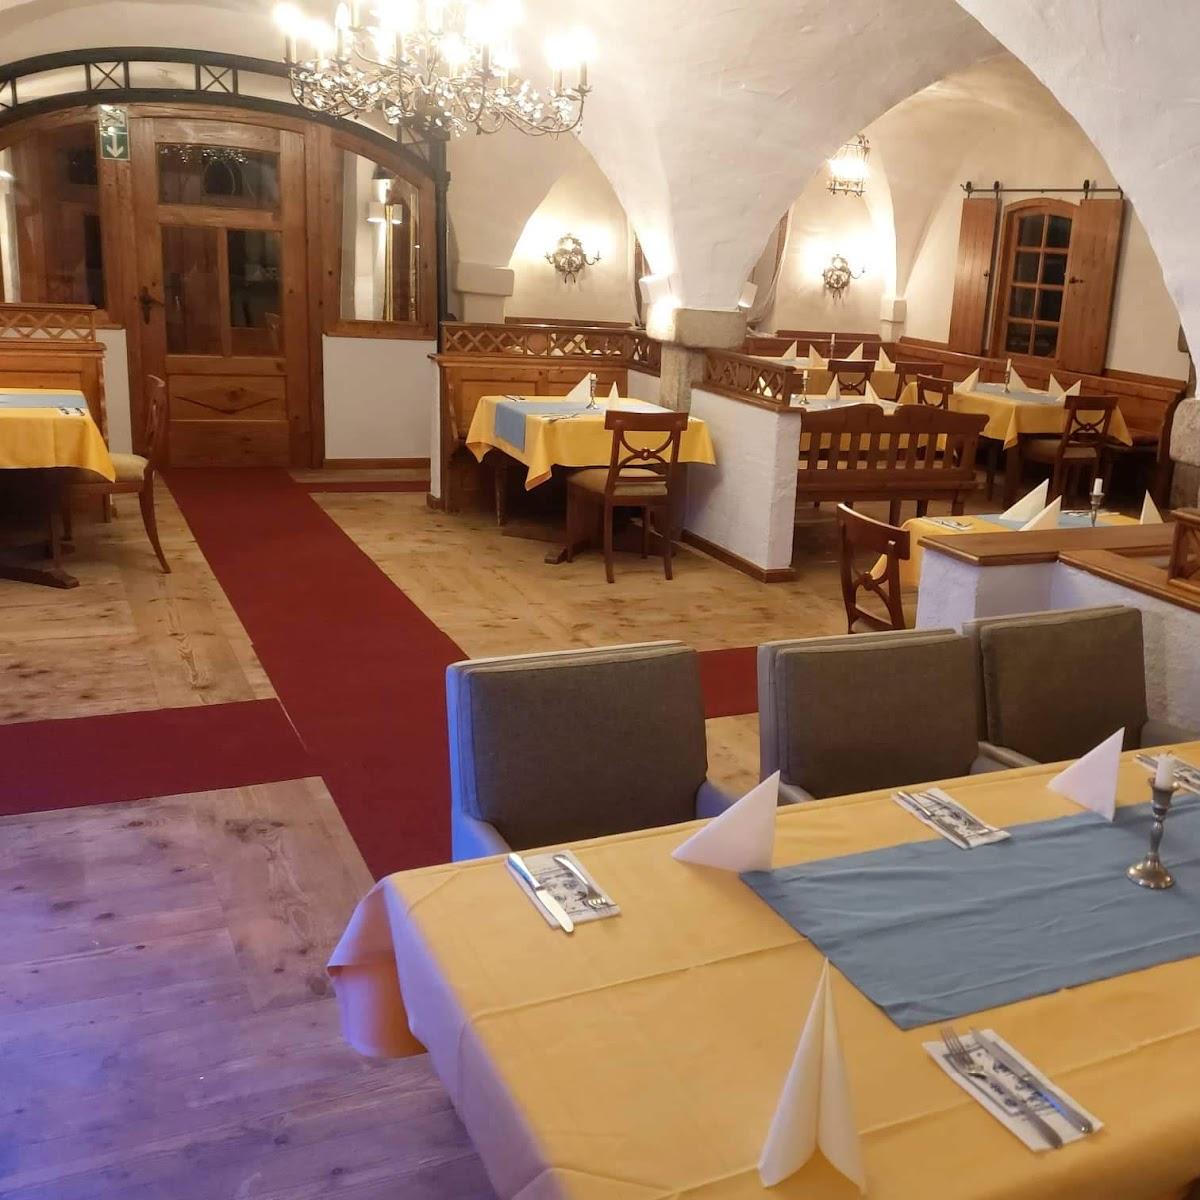 Restaurant "Santorini" in Neukirchen